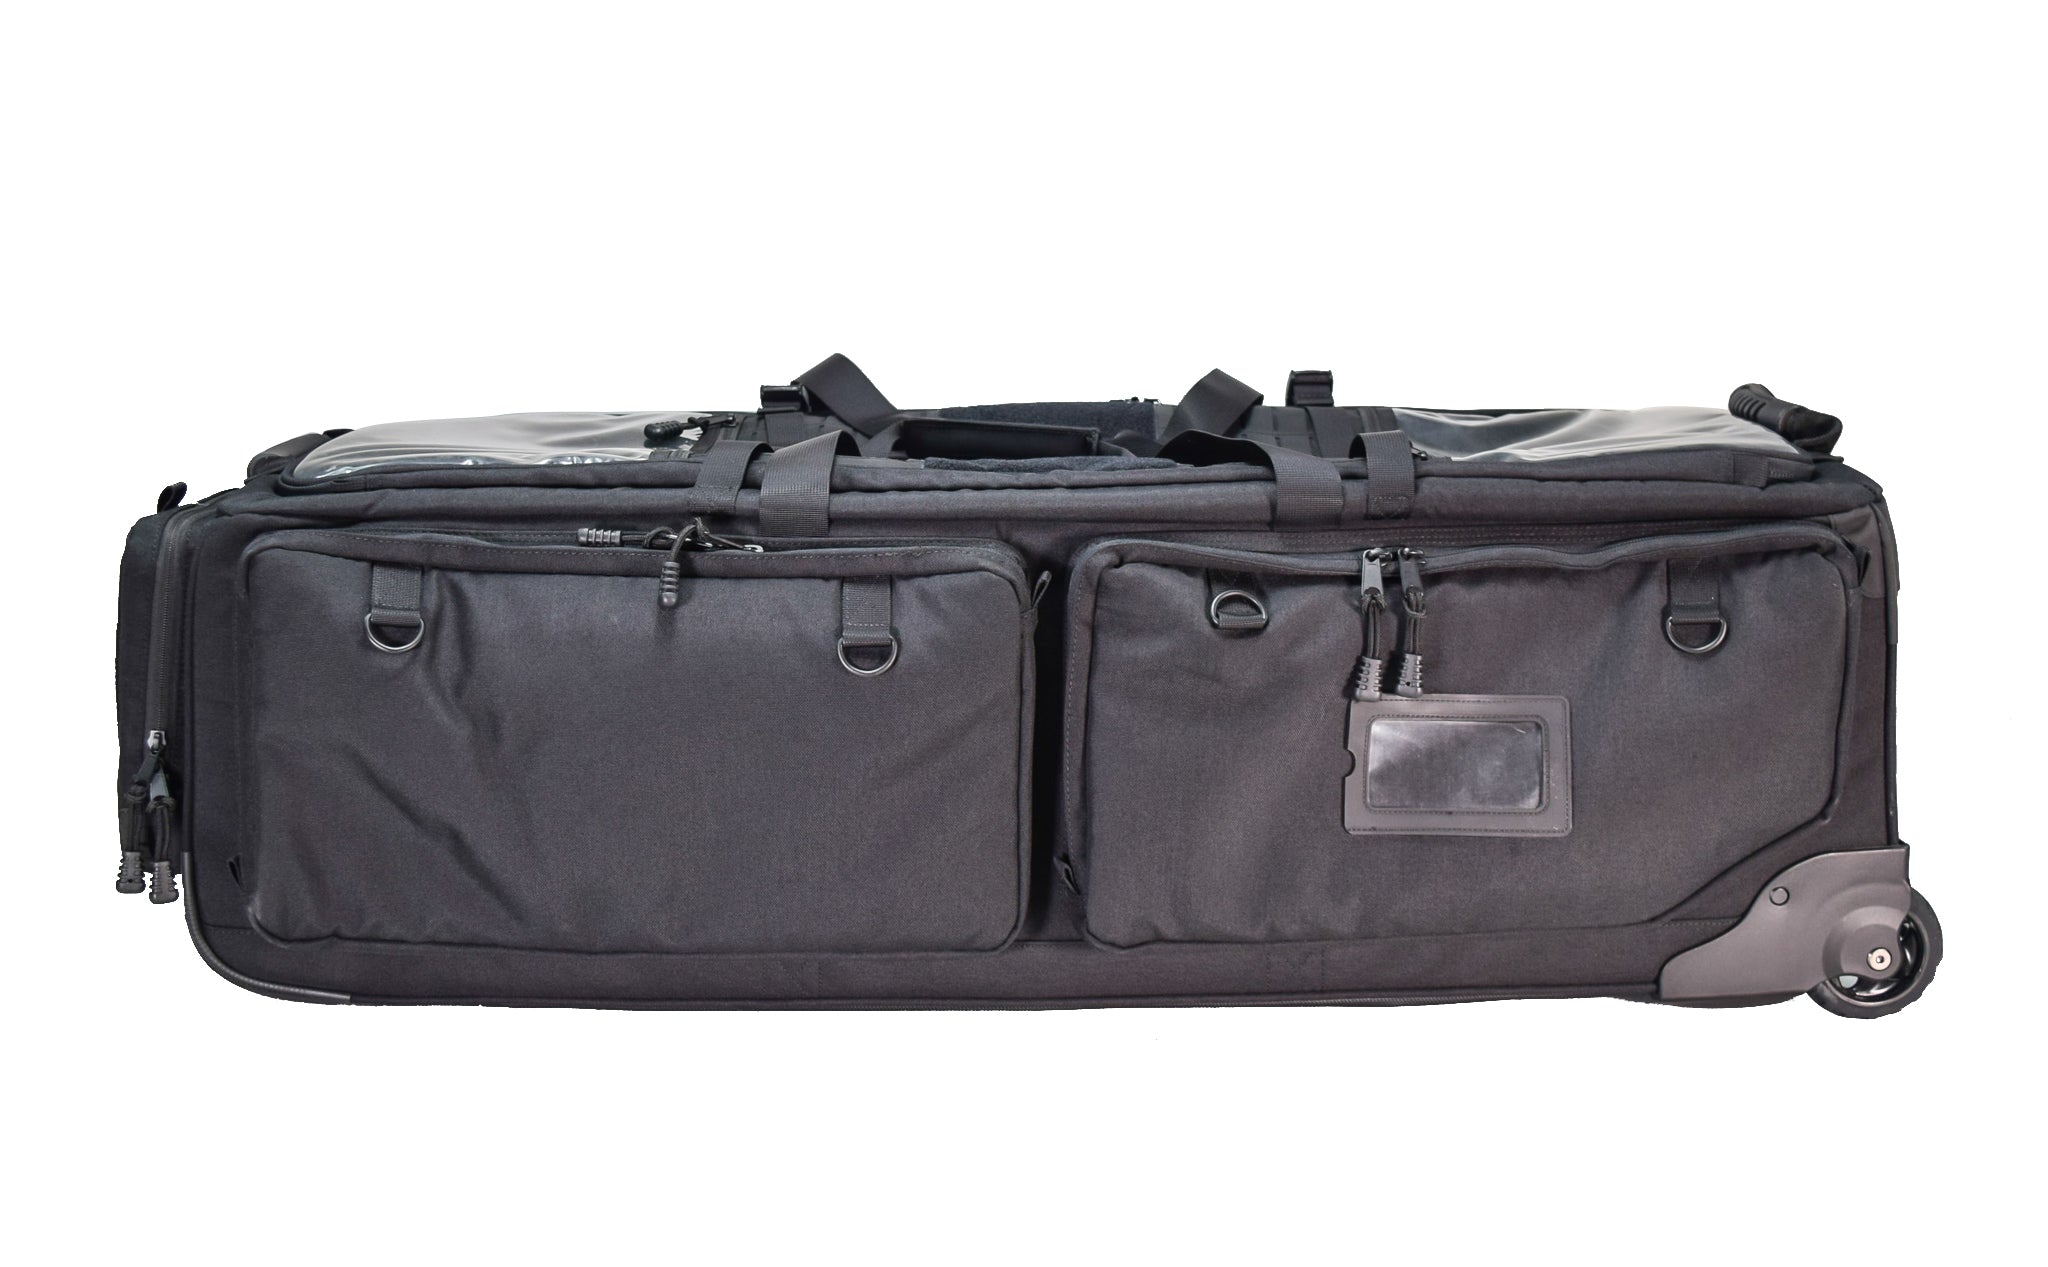 Ozone Black Rolling Transport Duffle Bag (38.5″)Eliminates Odors On Any Gear